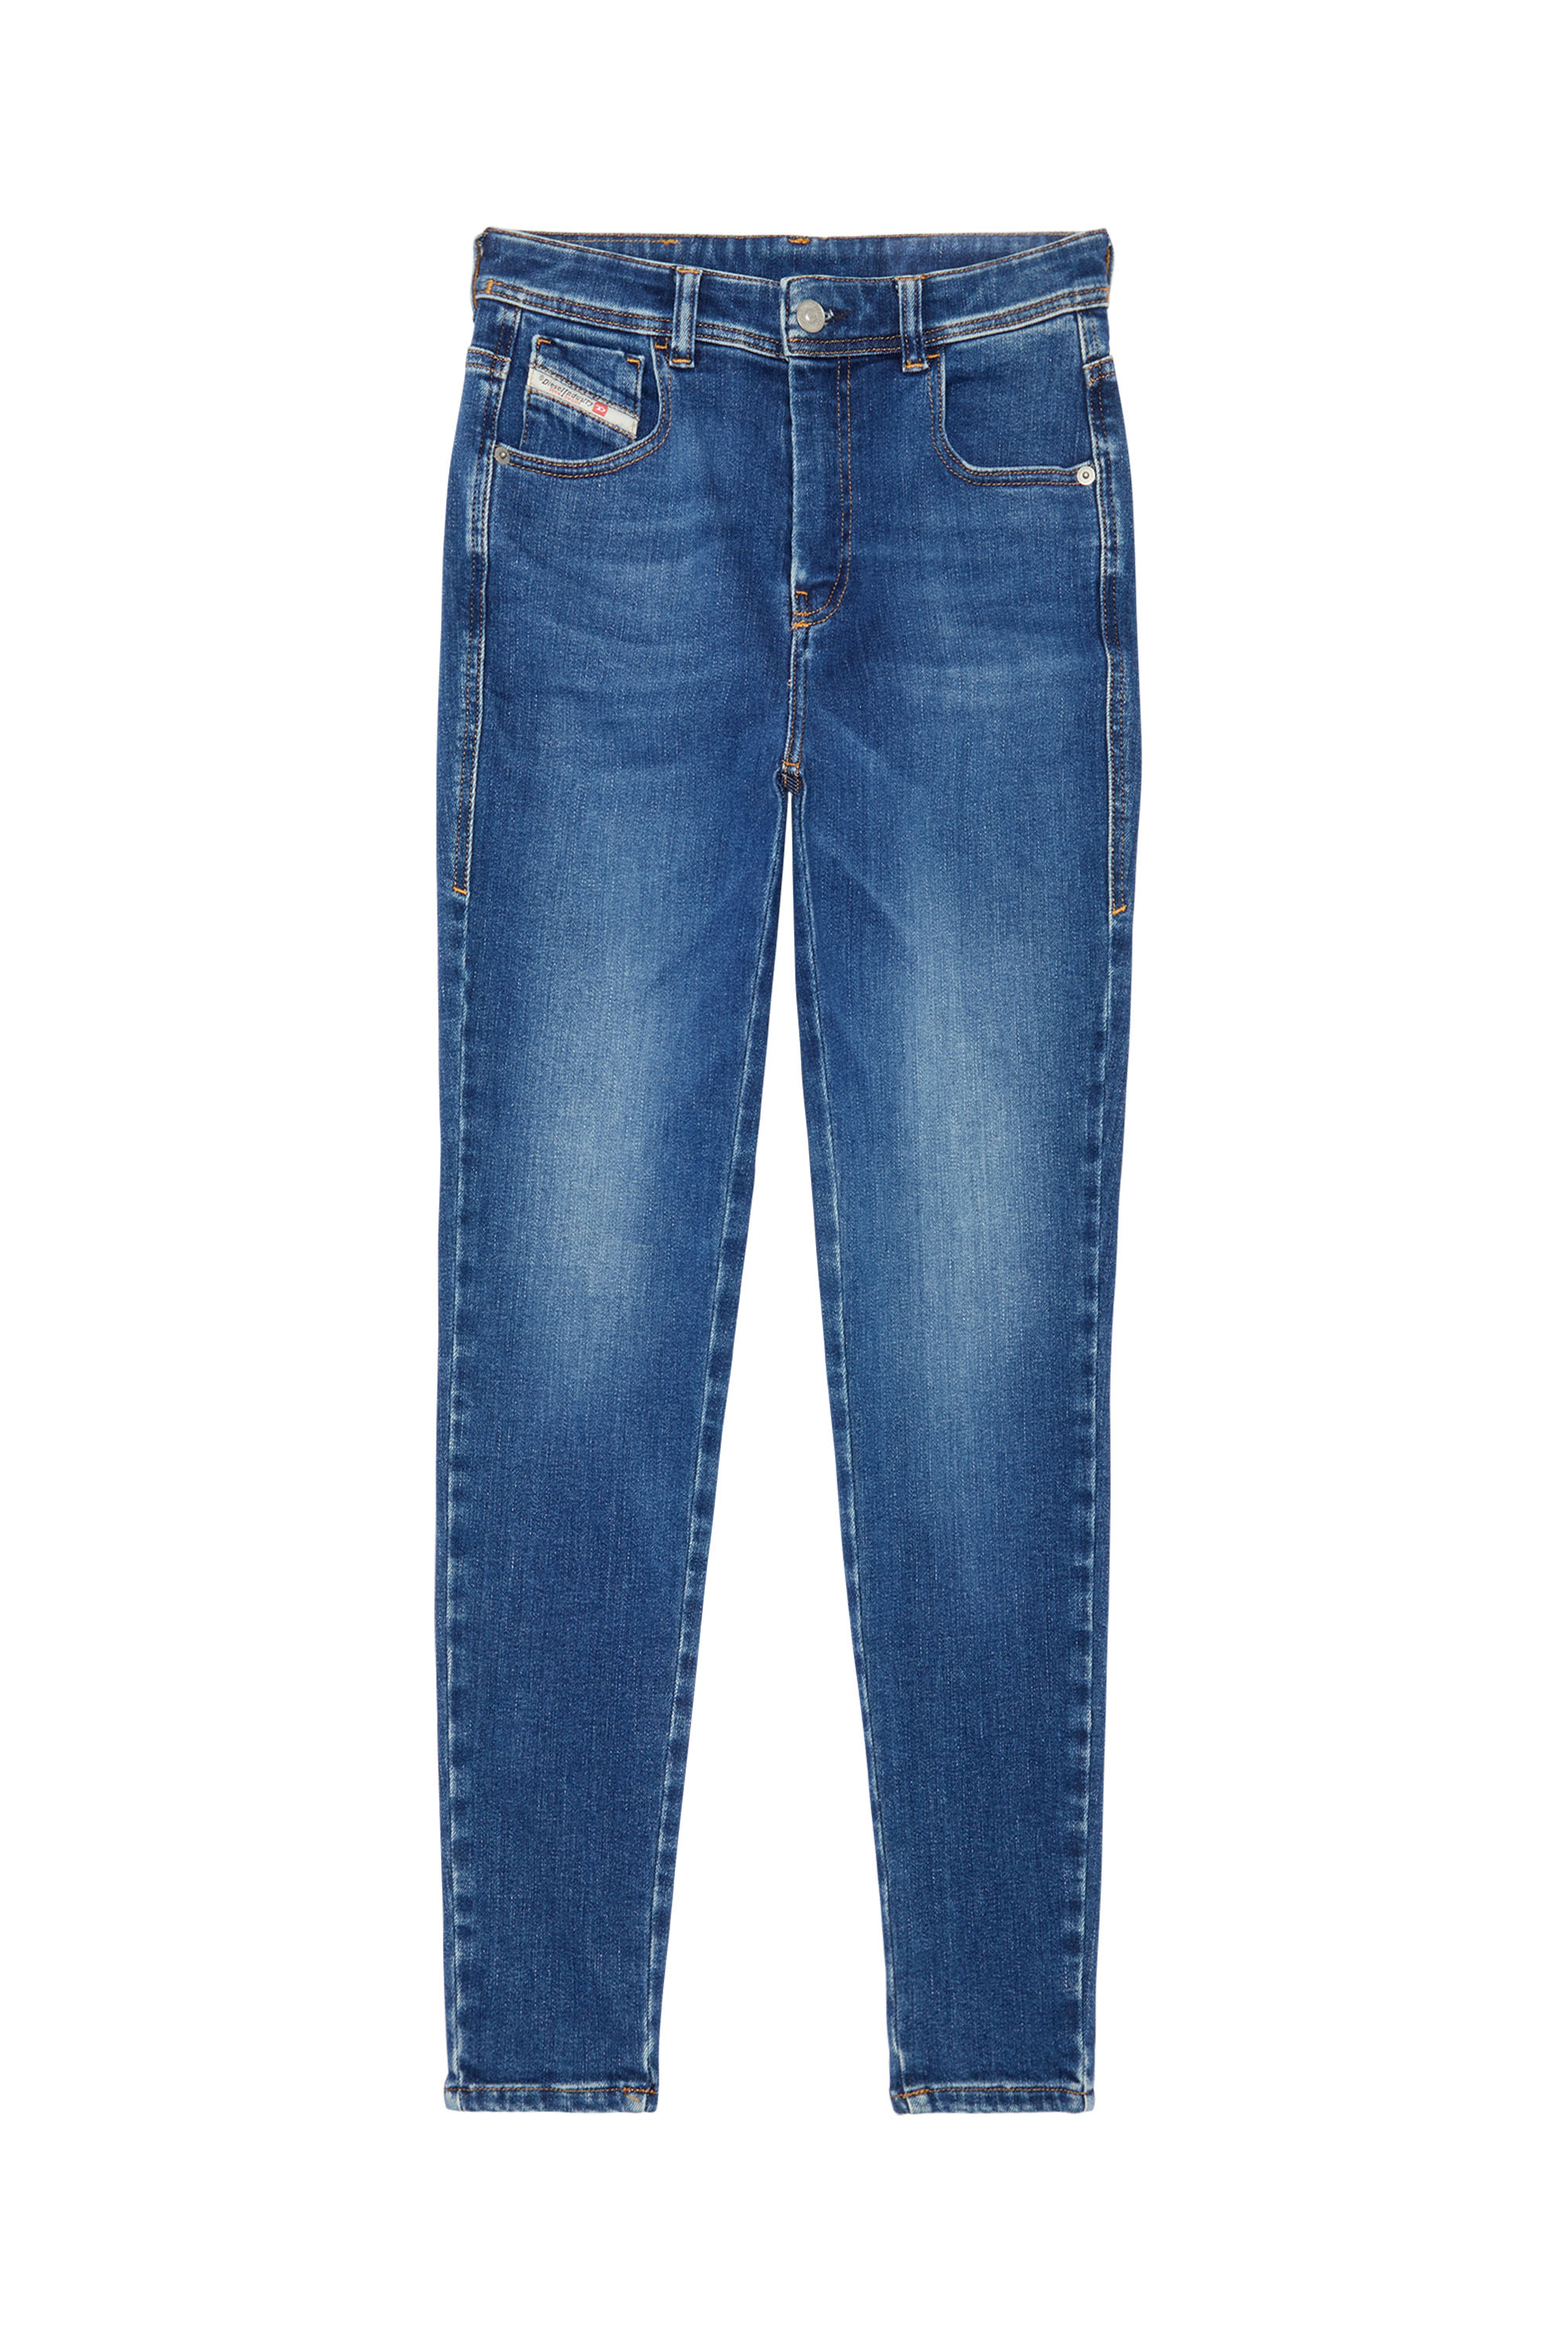 1984 SLANDY-HIGH 09C21 Super skinny Jeans, Dark Blue - Jeans